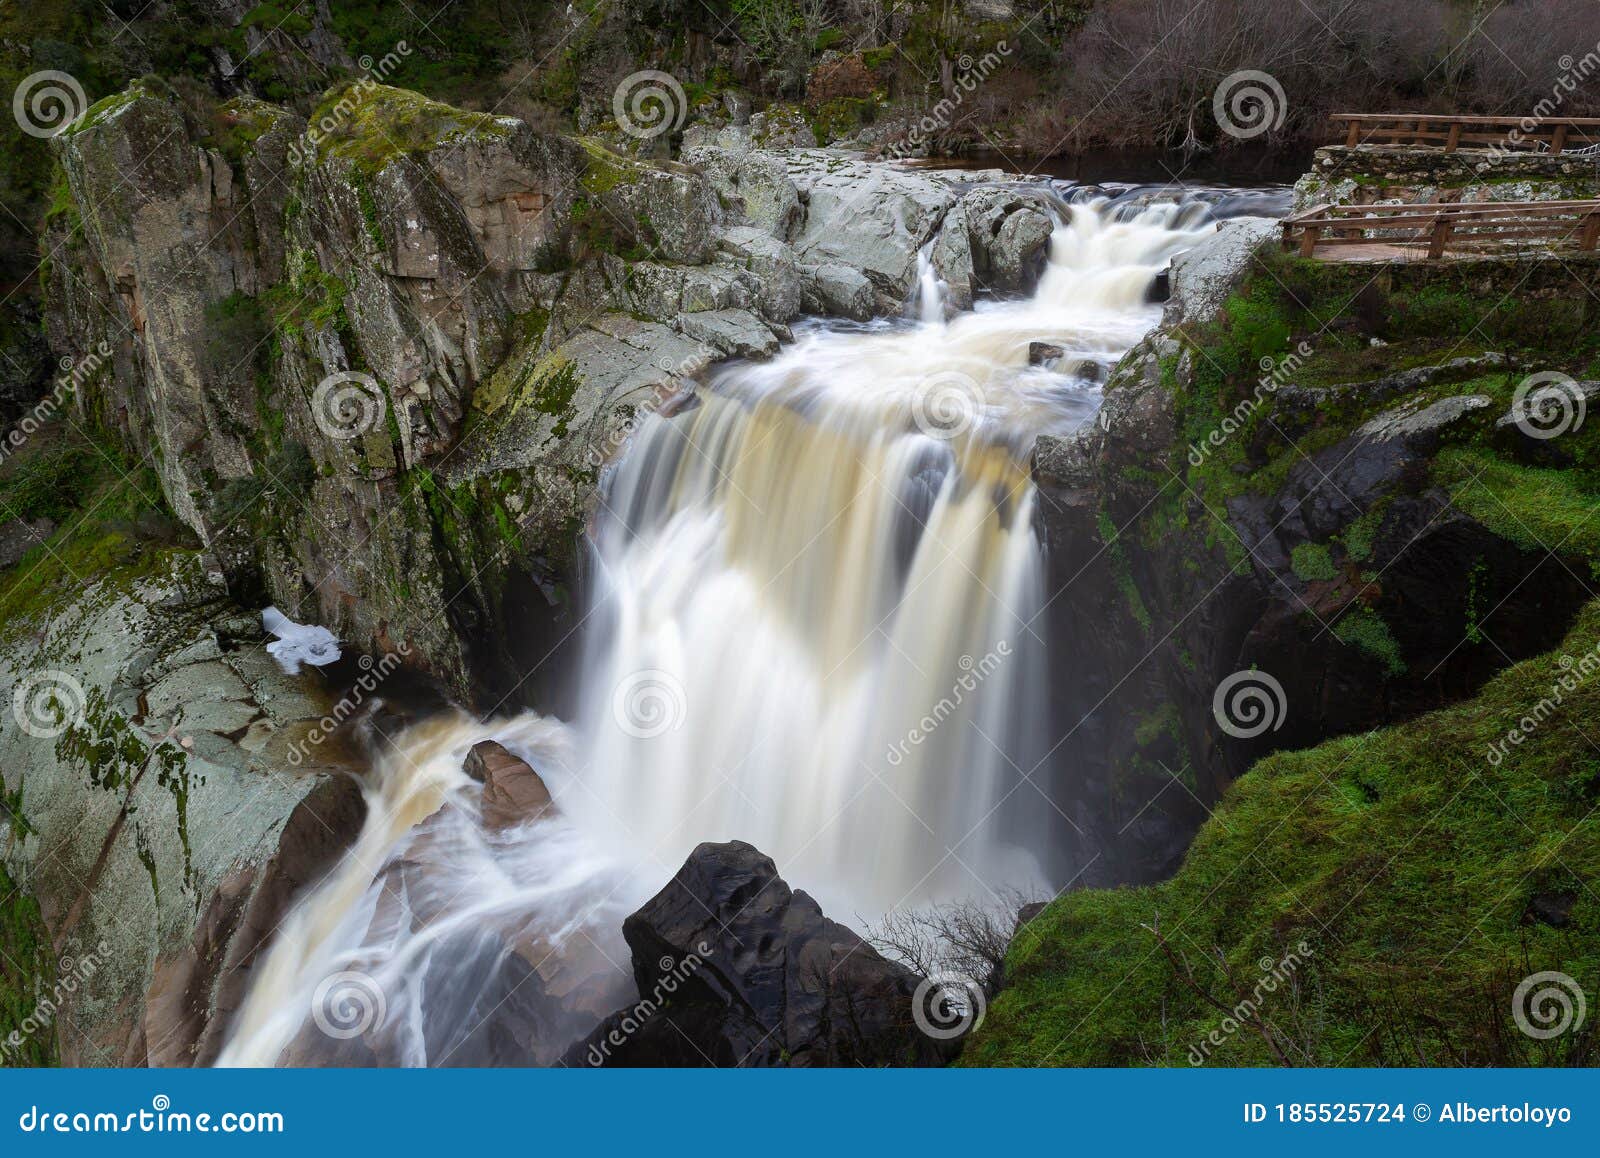 waterfall of pozo de los humos, salamanca province, spain